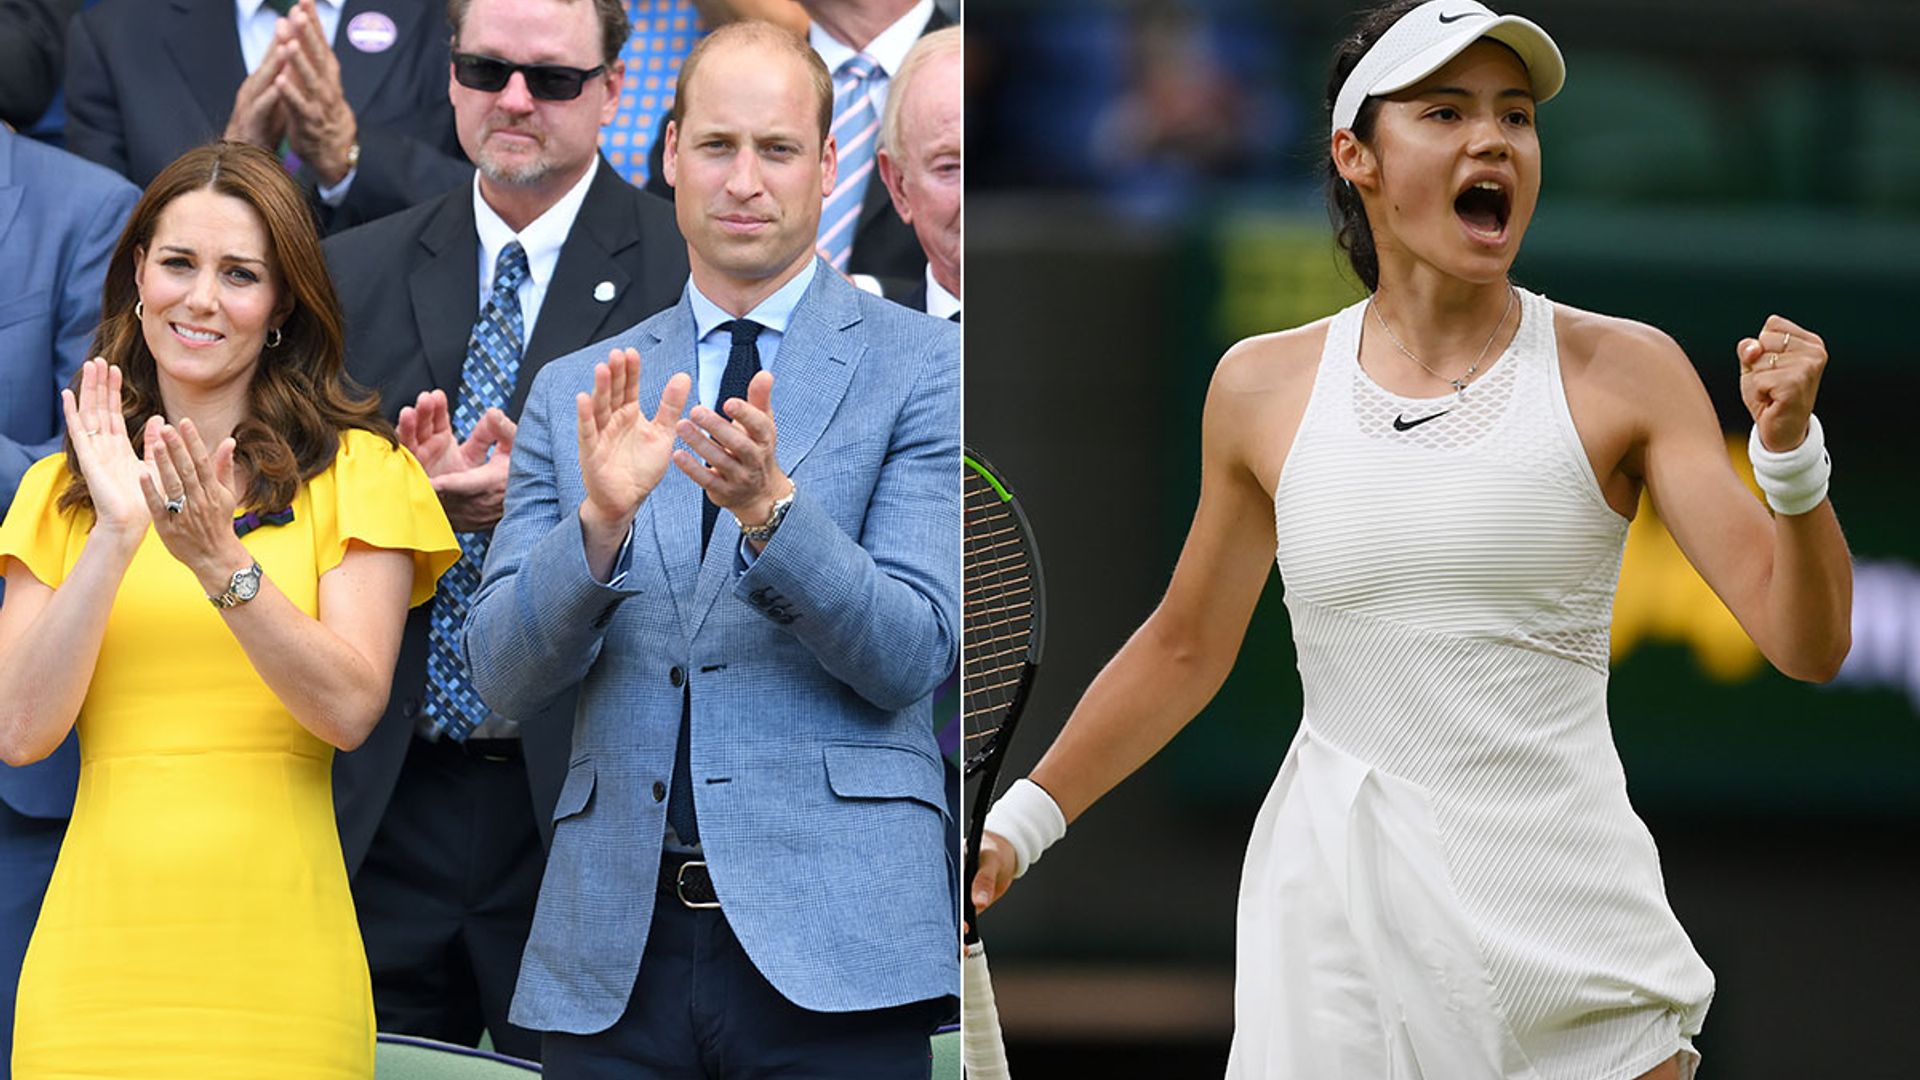 Prince William and Kate Middleton respond to tennis star Emma Raducanu after Wimbledon exit